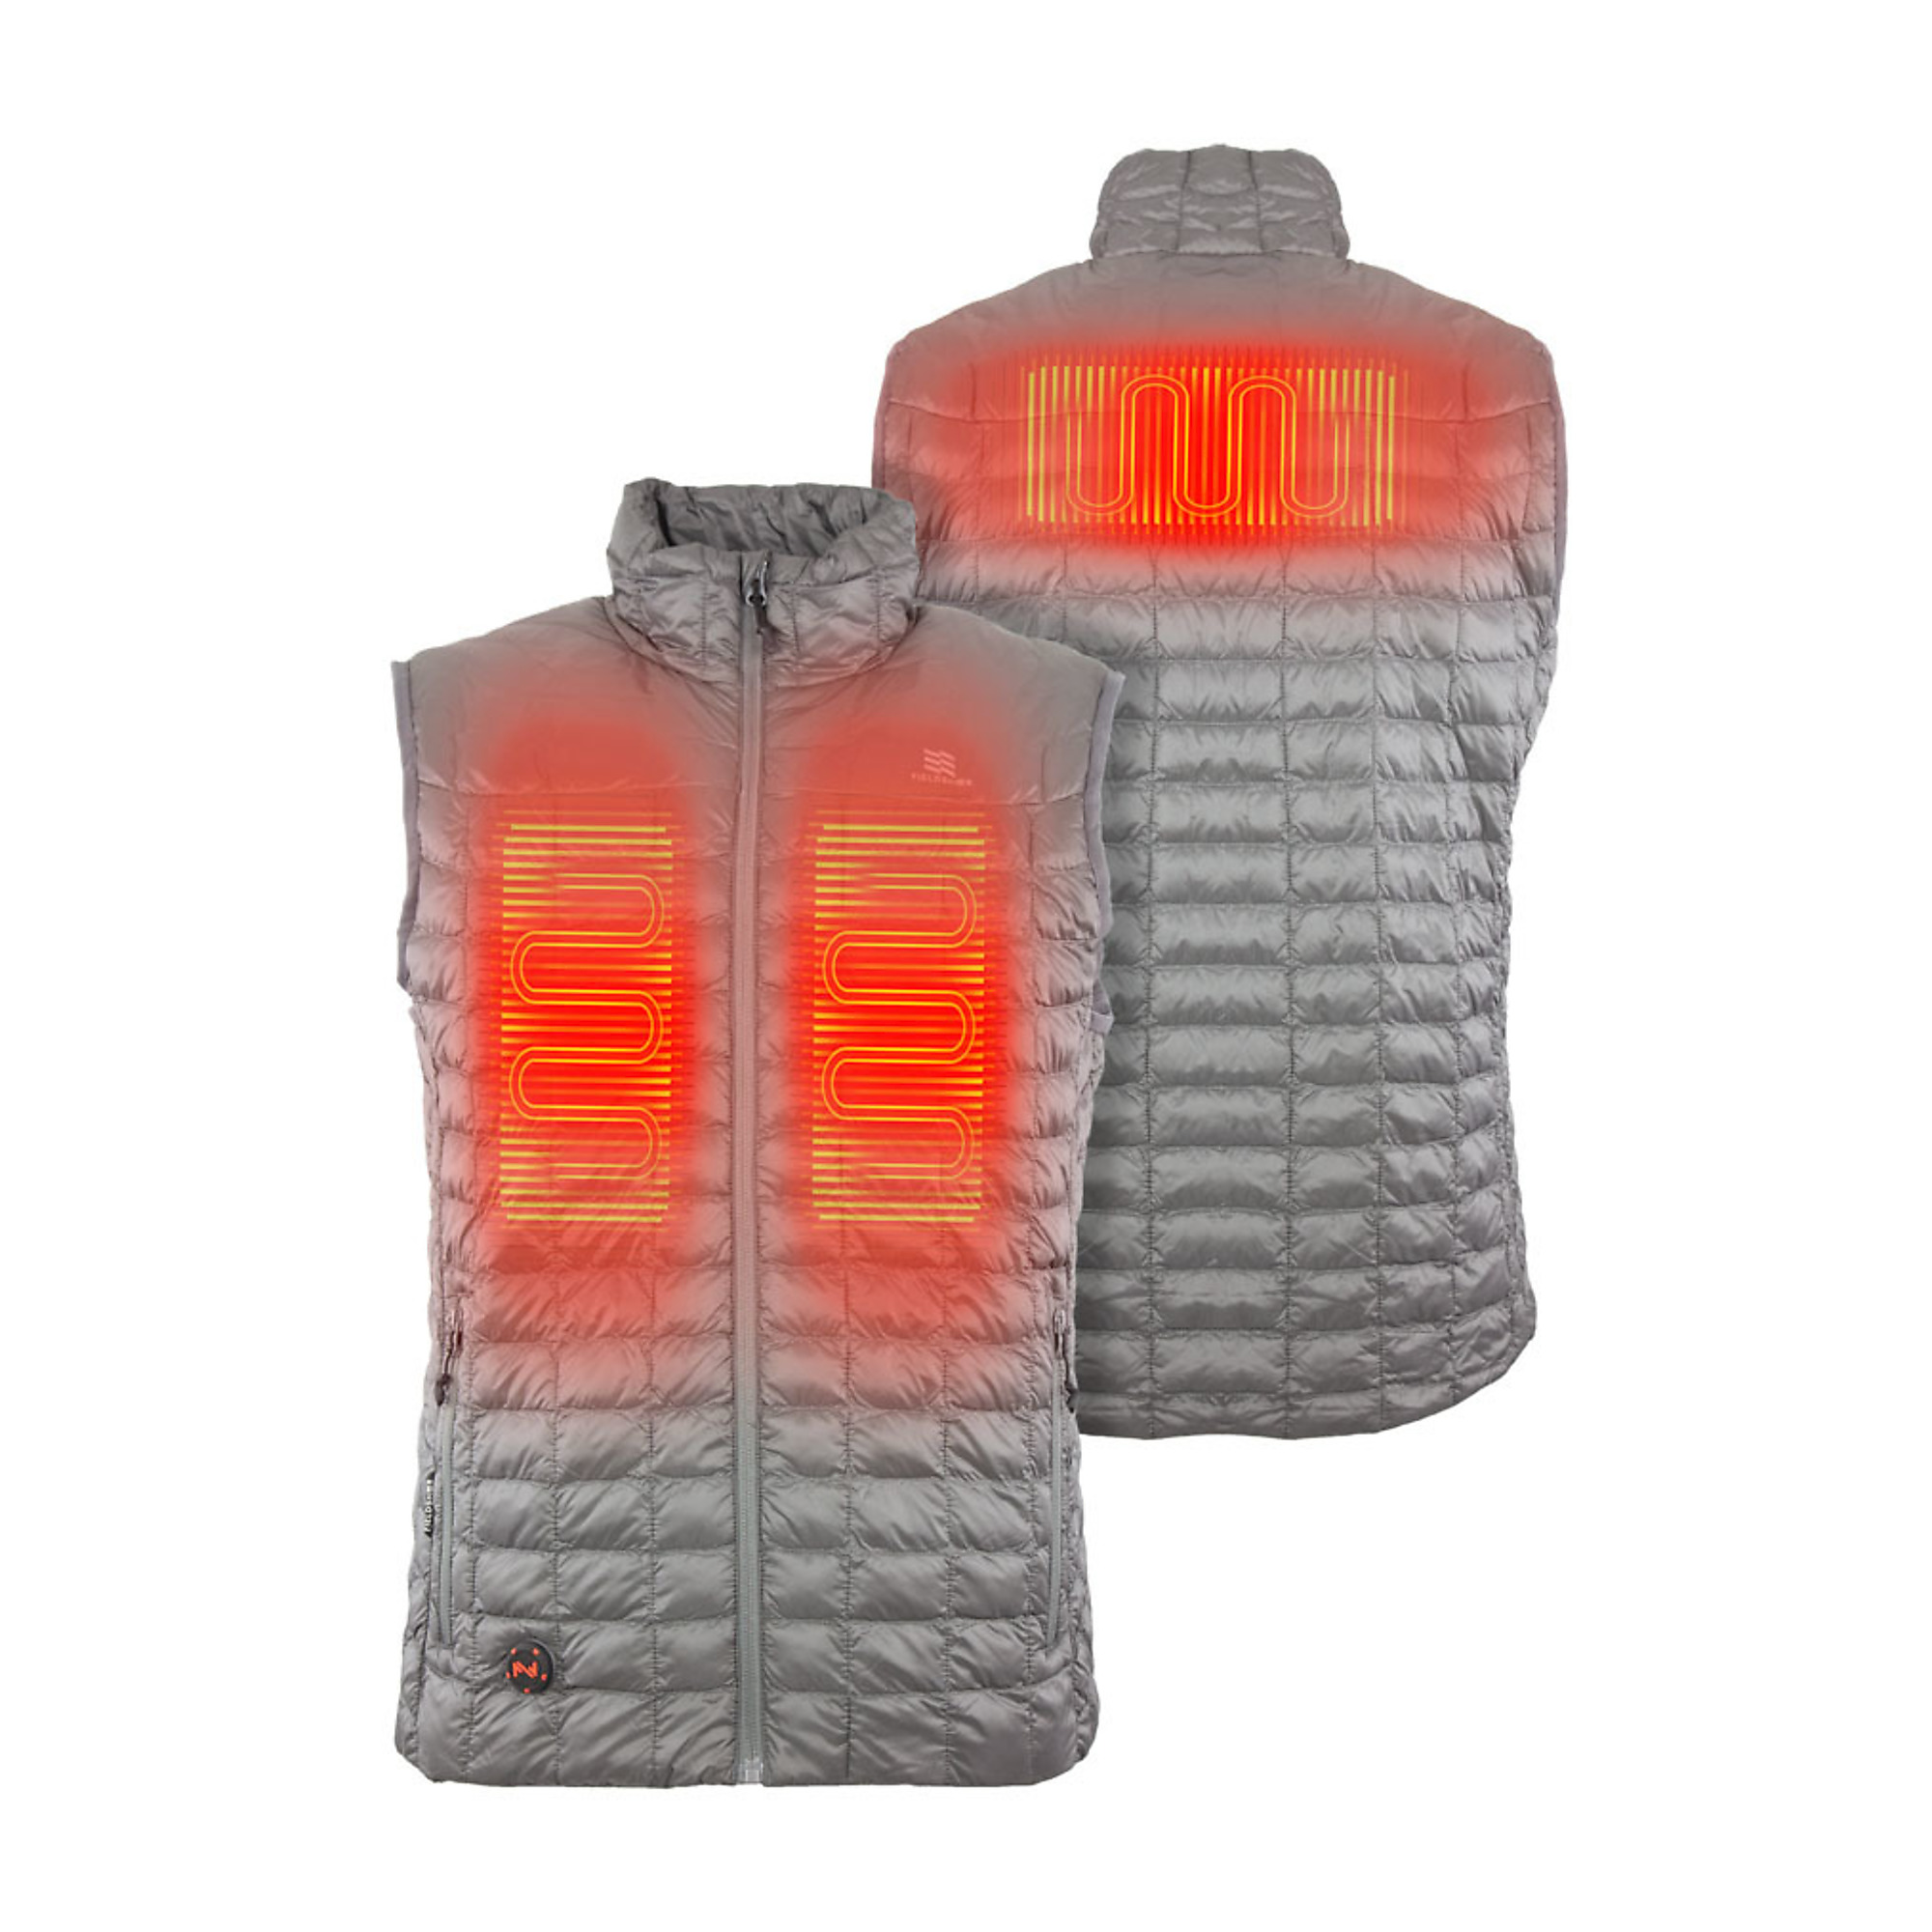 Fieldsheer, Men's Backcountry Heated Vest with 7.4v Battery, Size S, Color Grey, Model MWMV04320220